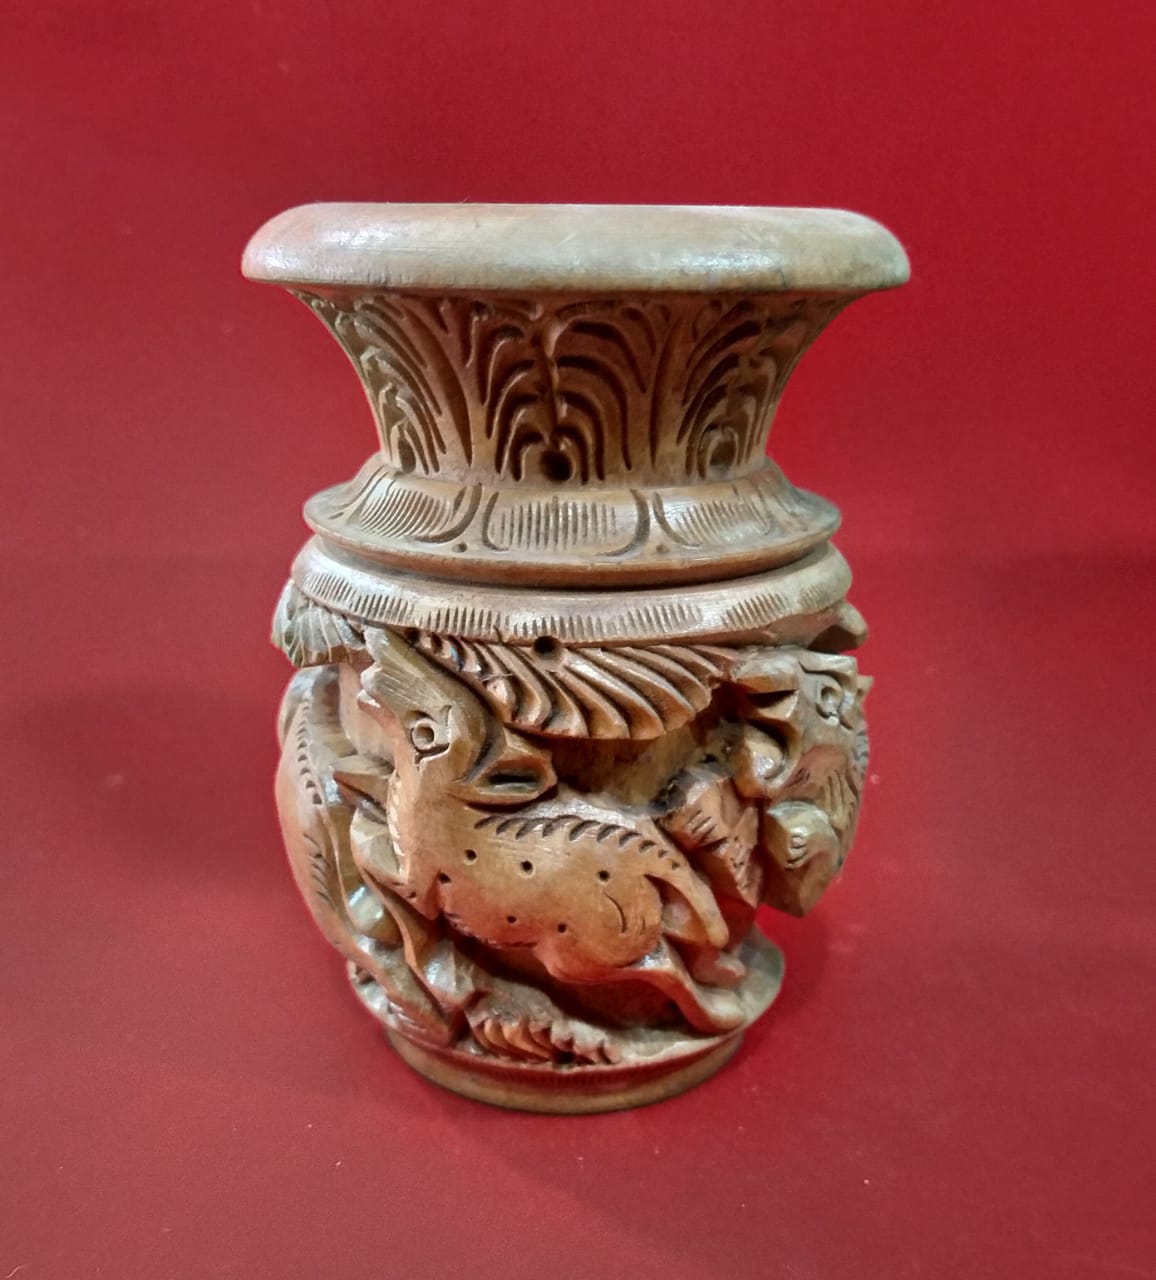 Handcrafted Wooden Flower Pot